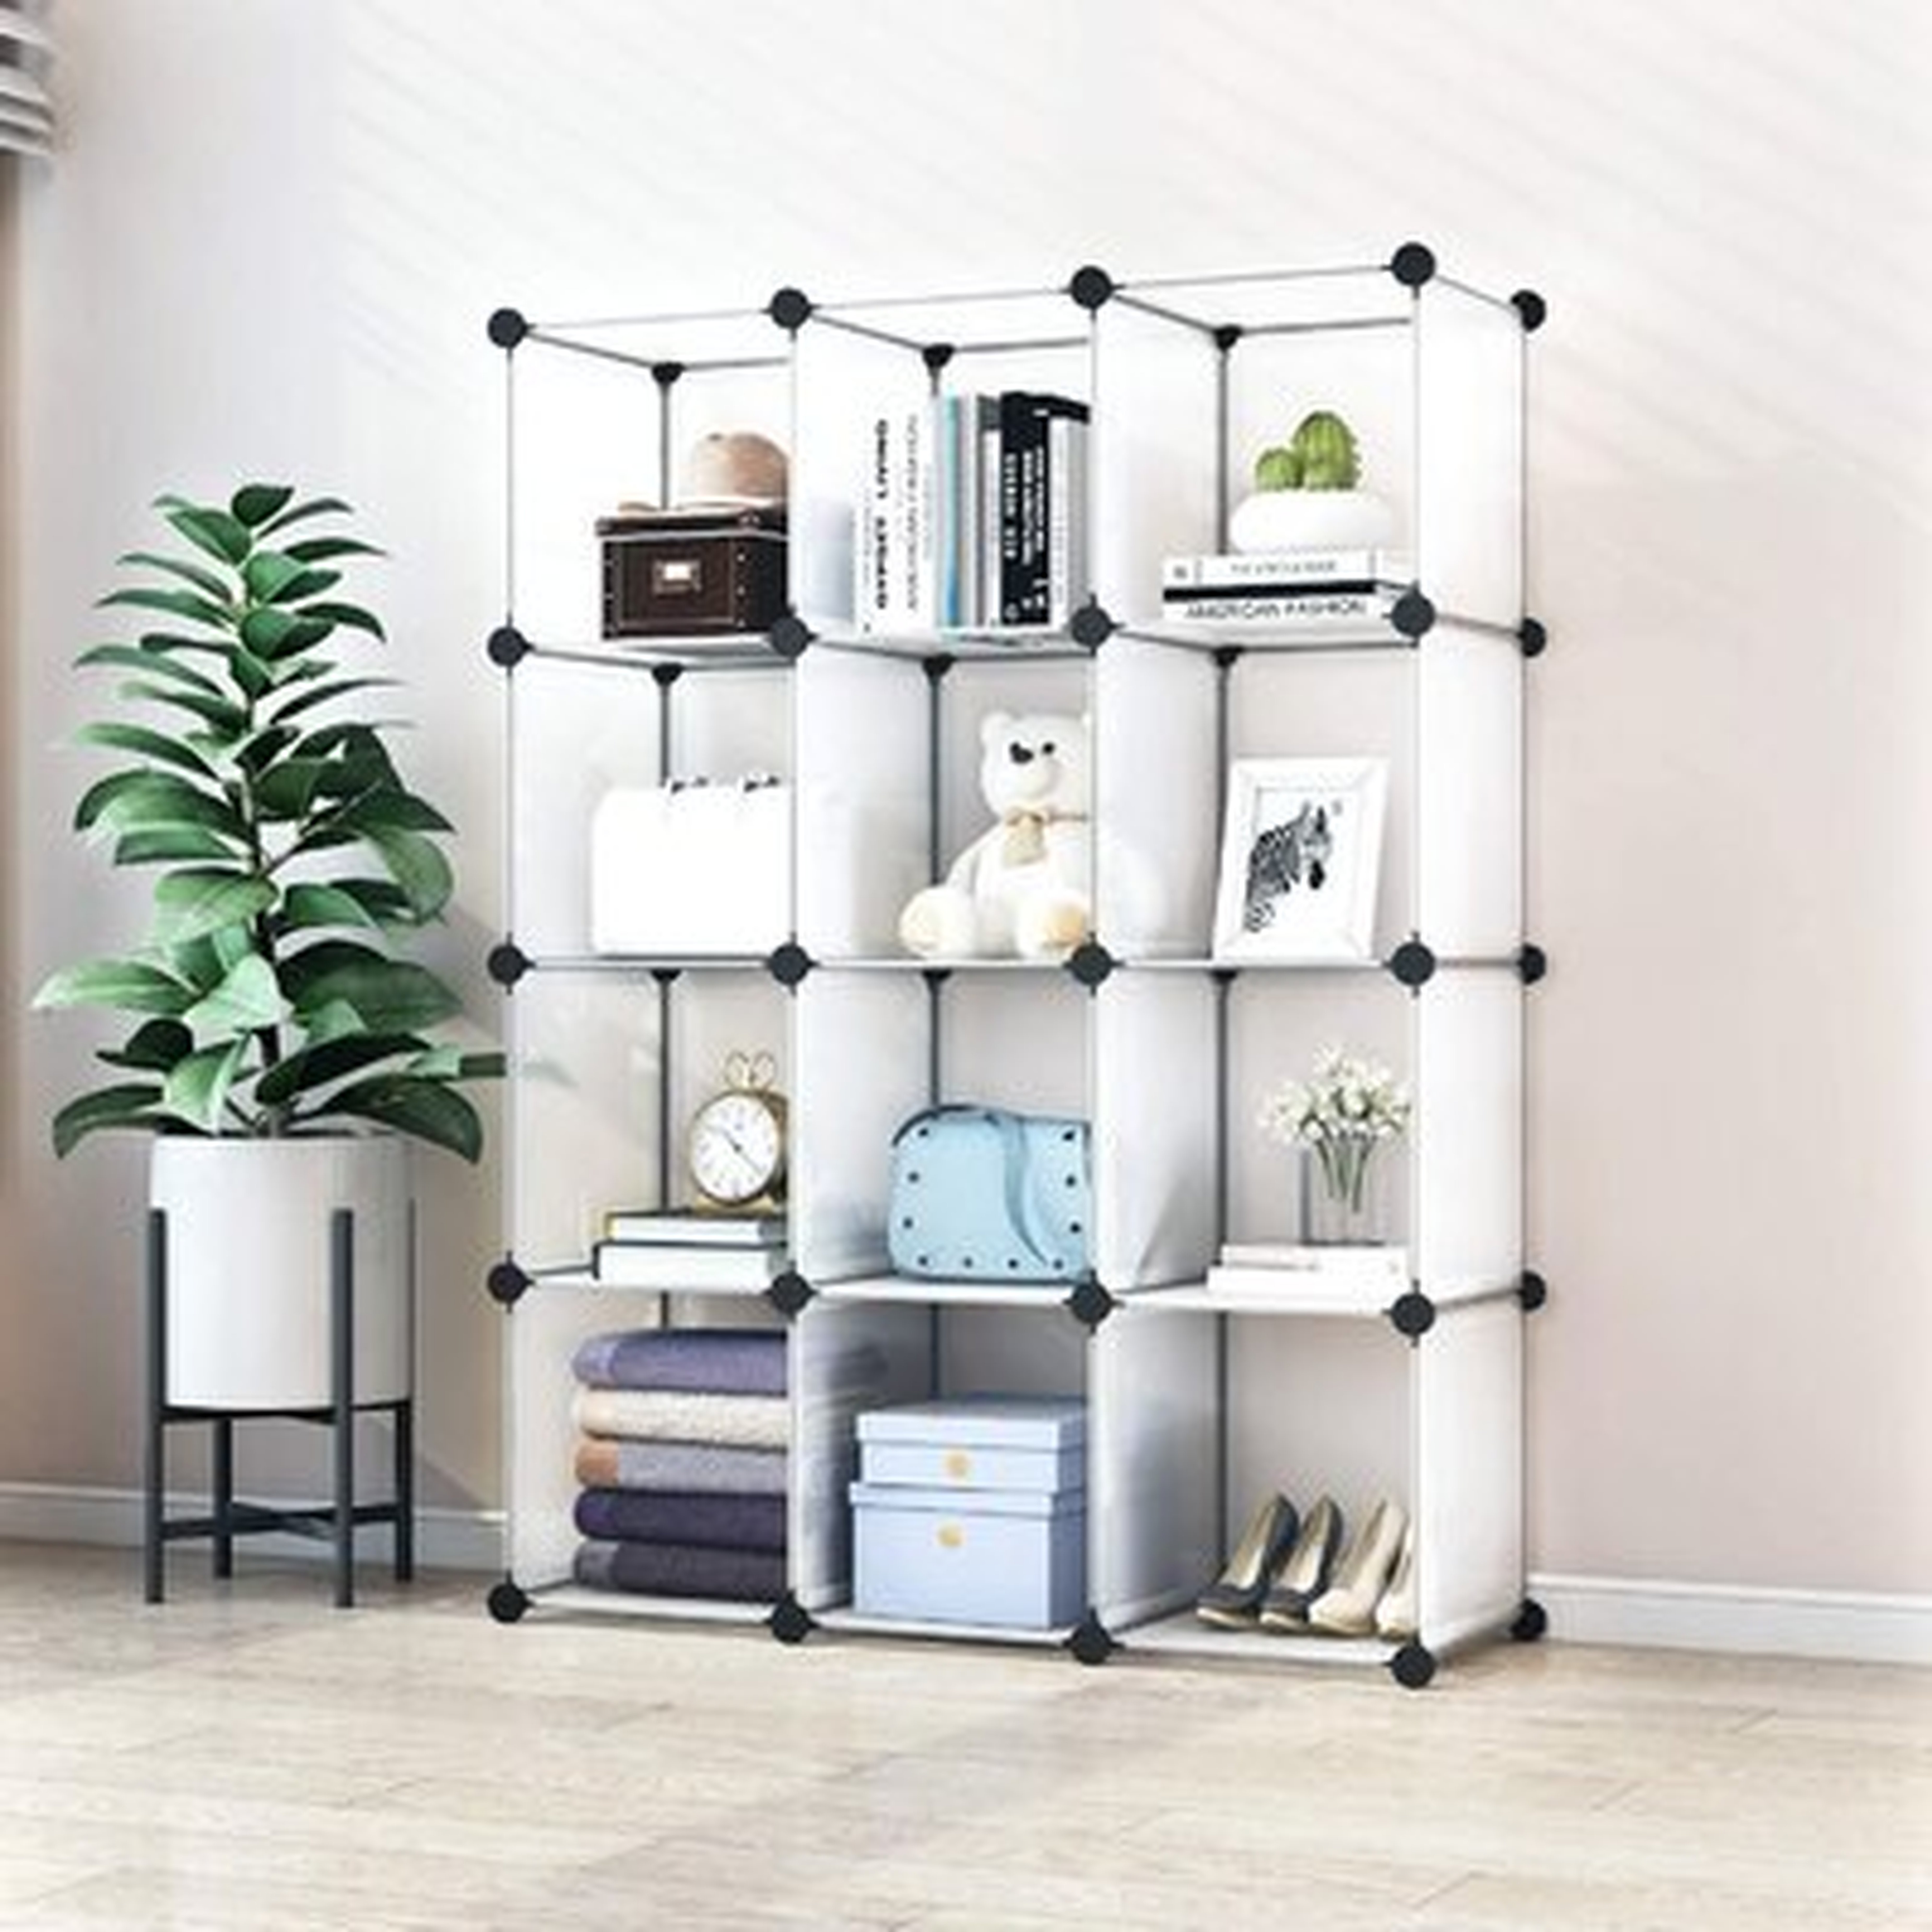 12 Cubes Storage Organizer,Plastic Stackable Shelves Multifunctional Modular Bookcase Closet Cabinet For Books,Clothes,Toys,Artworks,Decorations - Wayfair